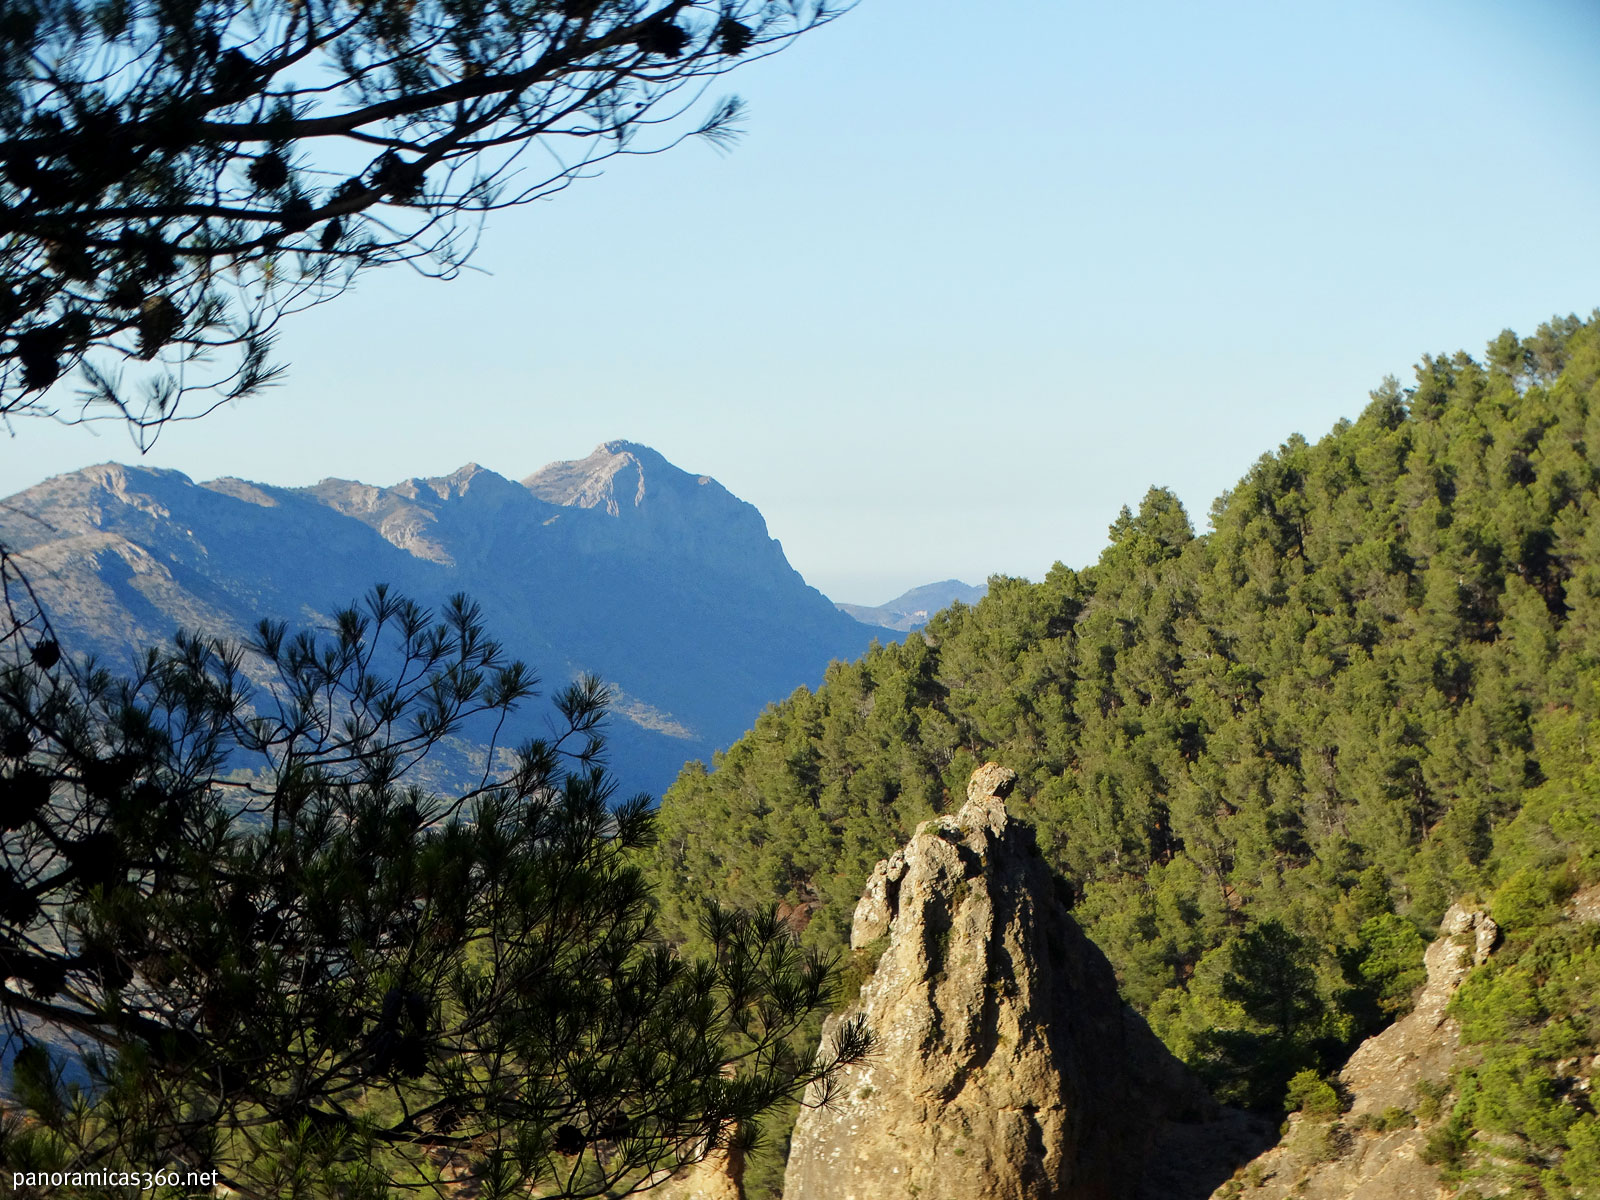 Sierra de Benicadell